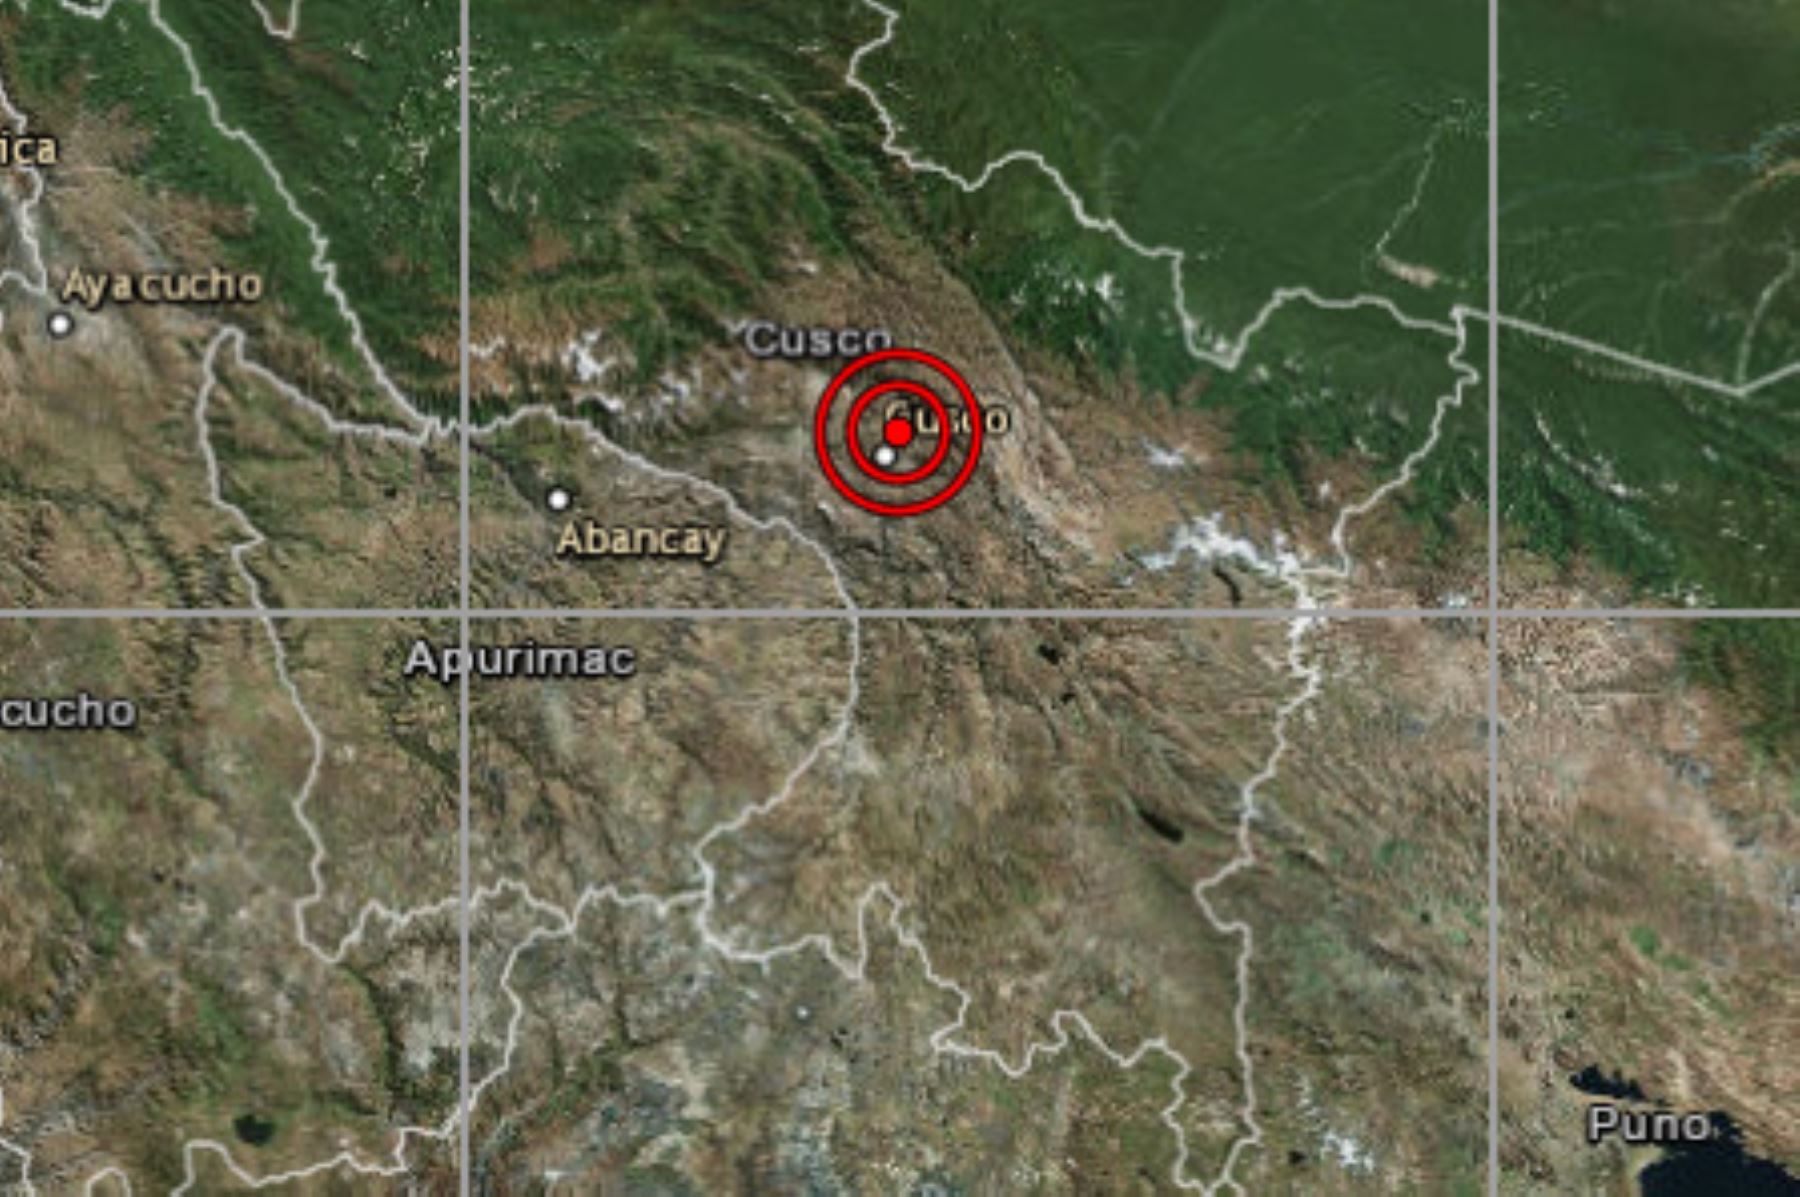 Un sismo de magnitud 4 se registró a las 6:11 horas a 9 kilómetros al noreste de Cusco, reportó el IGP.